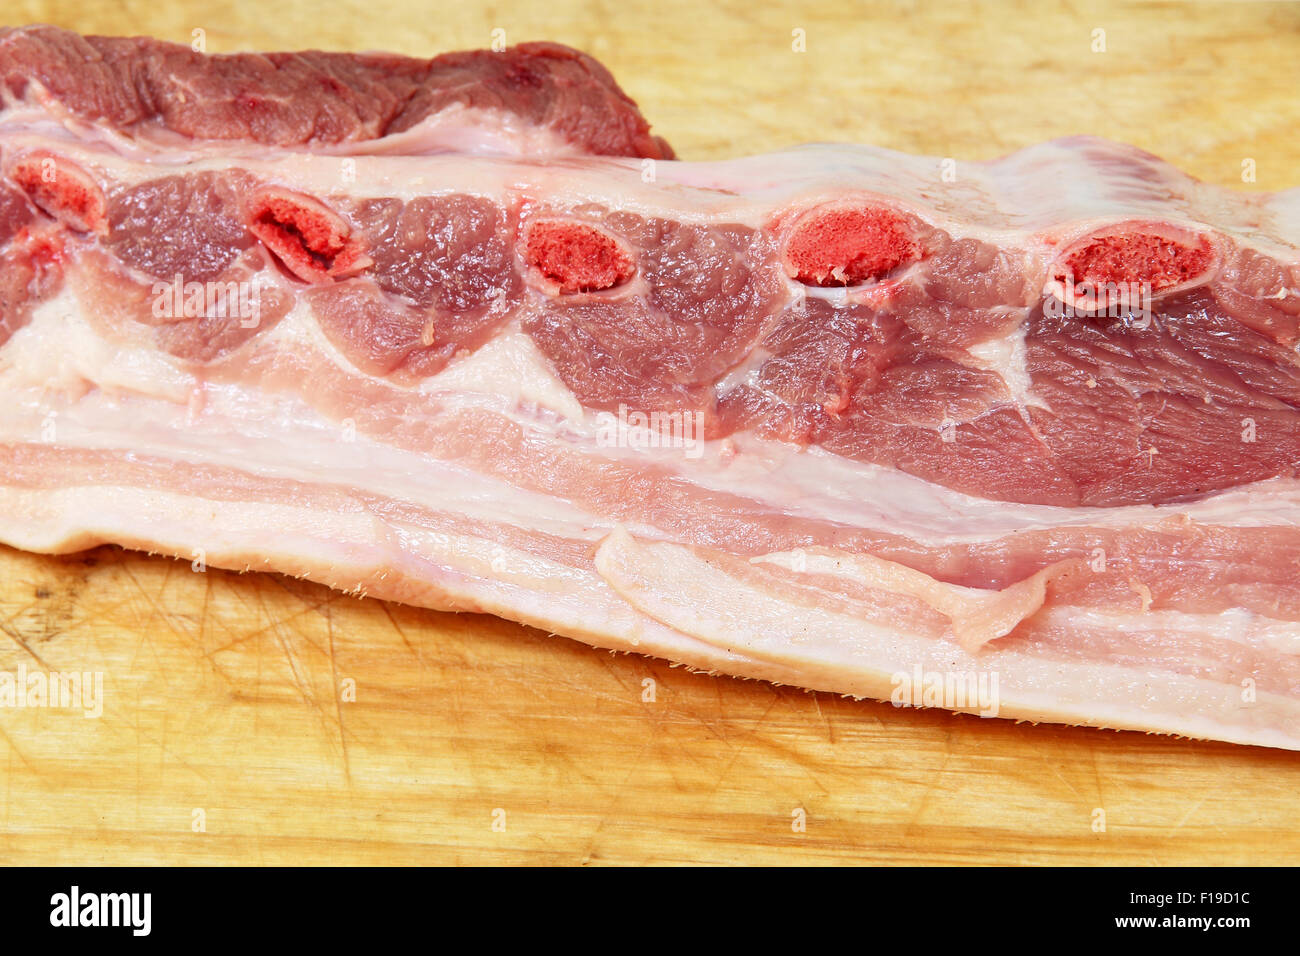 Appetizing raw pork ribs on wooden cutting board. Stock Photo